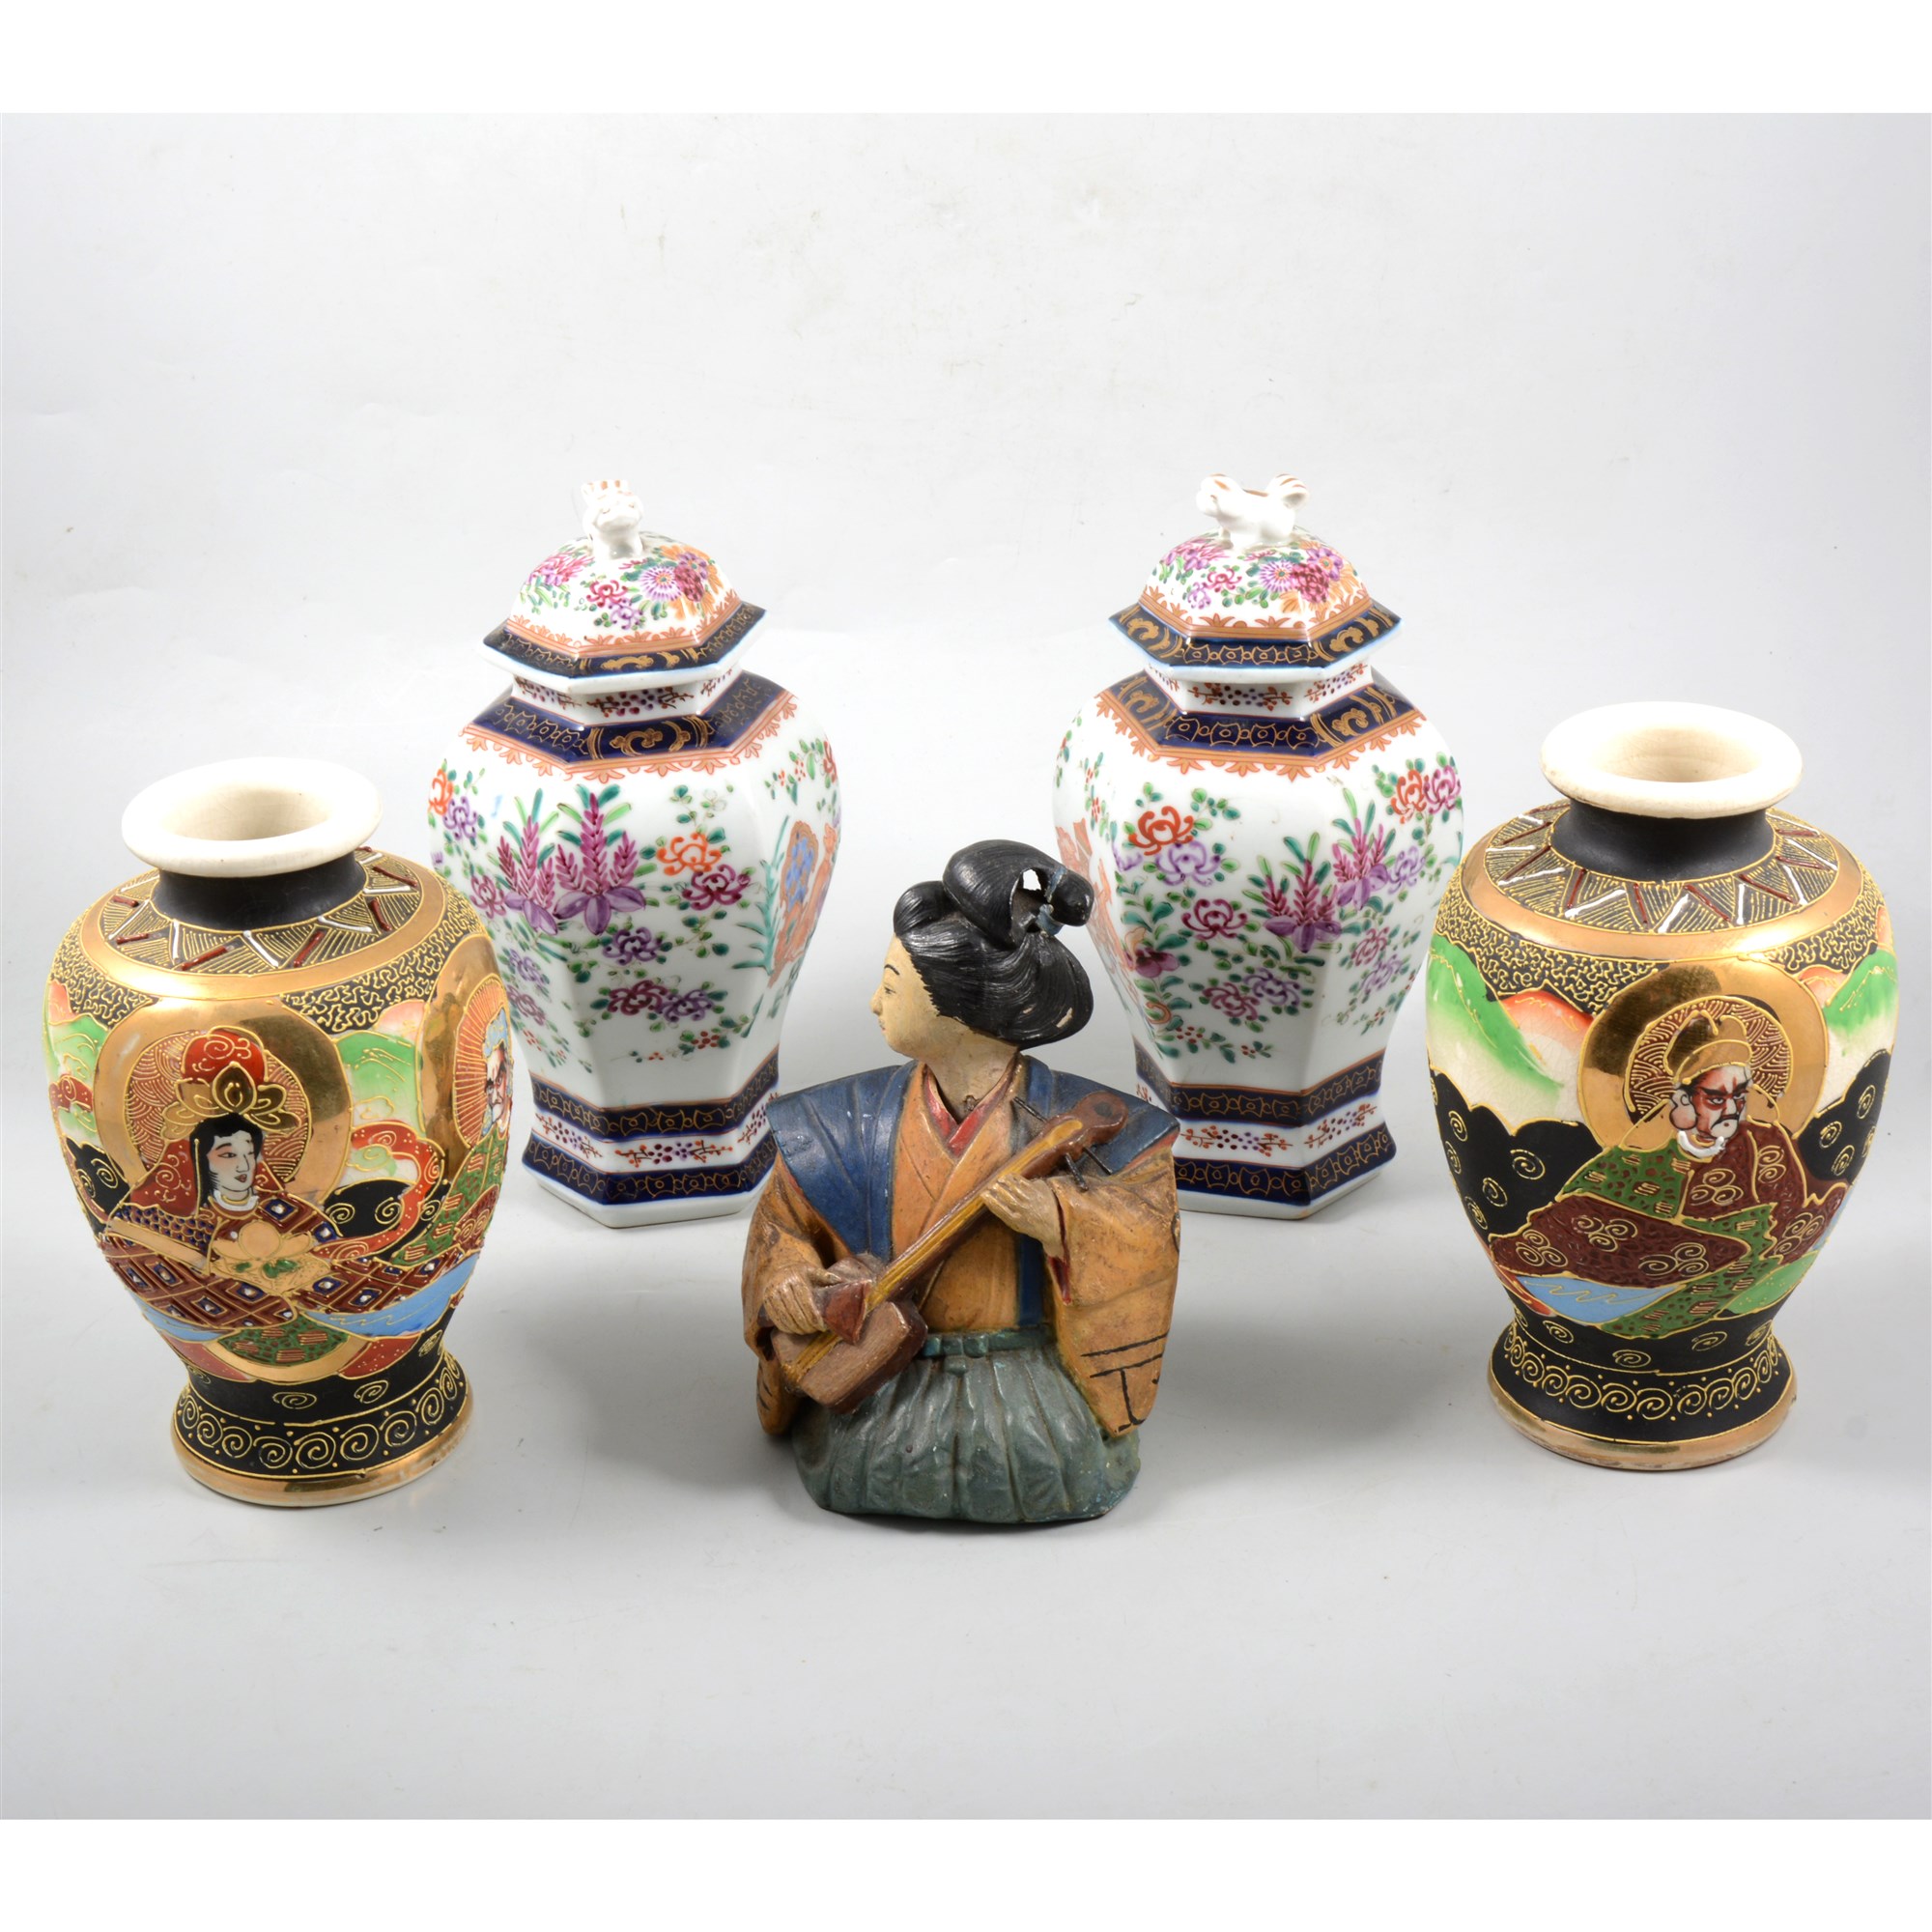 A quantity of Japanese ceramic items, including Satsuma vases, nodding figures, etc - Image 2 of 2